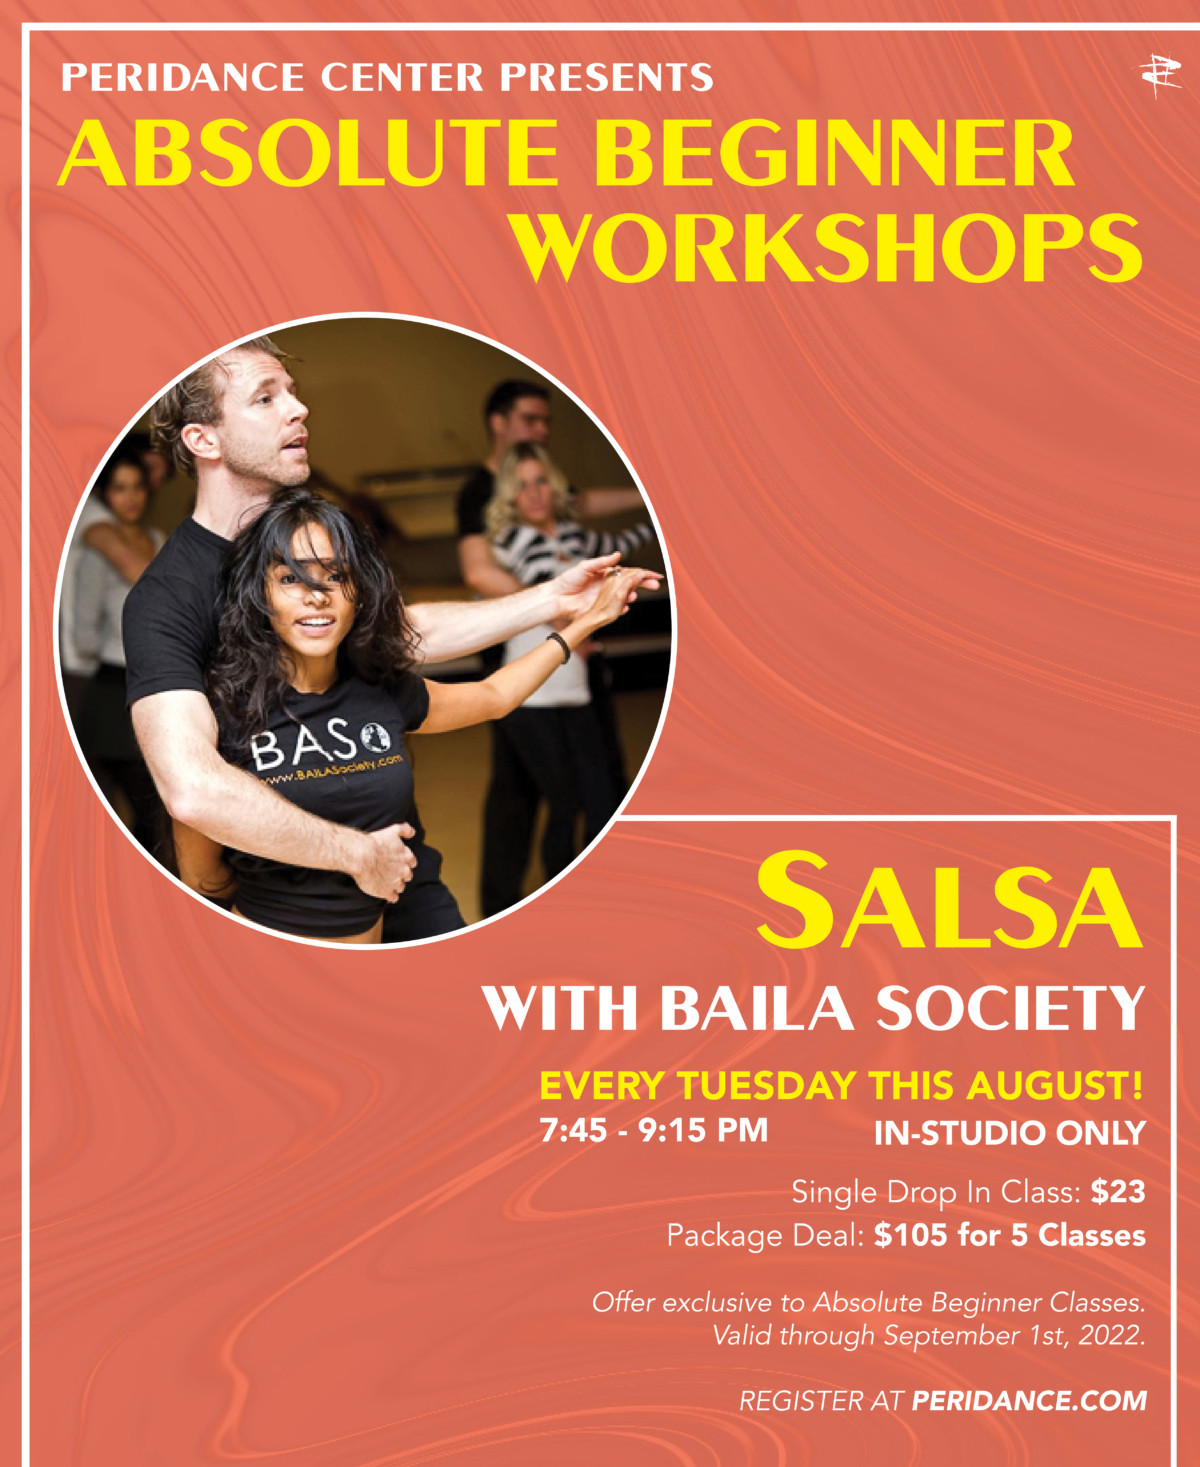 BAILA Society NYC Salsa Classes and Worldclass Performances